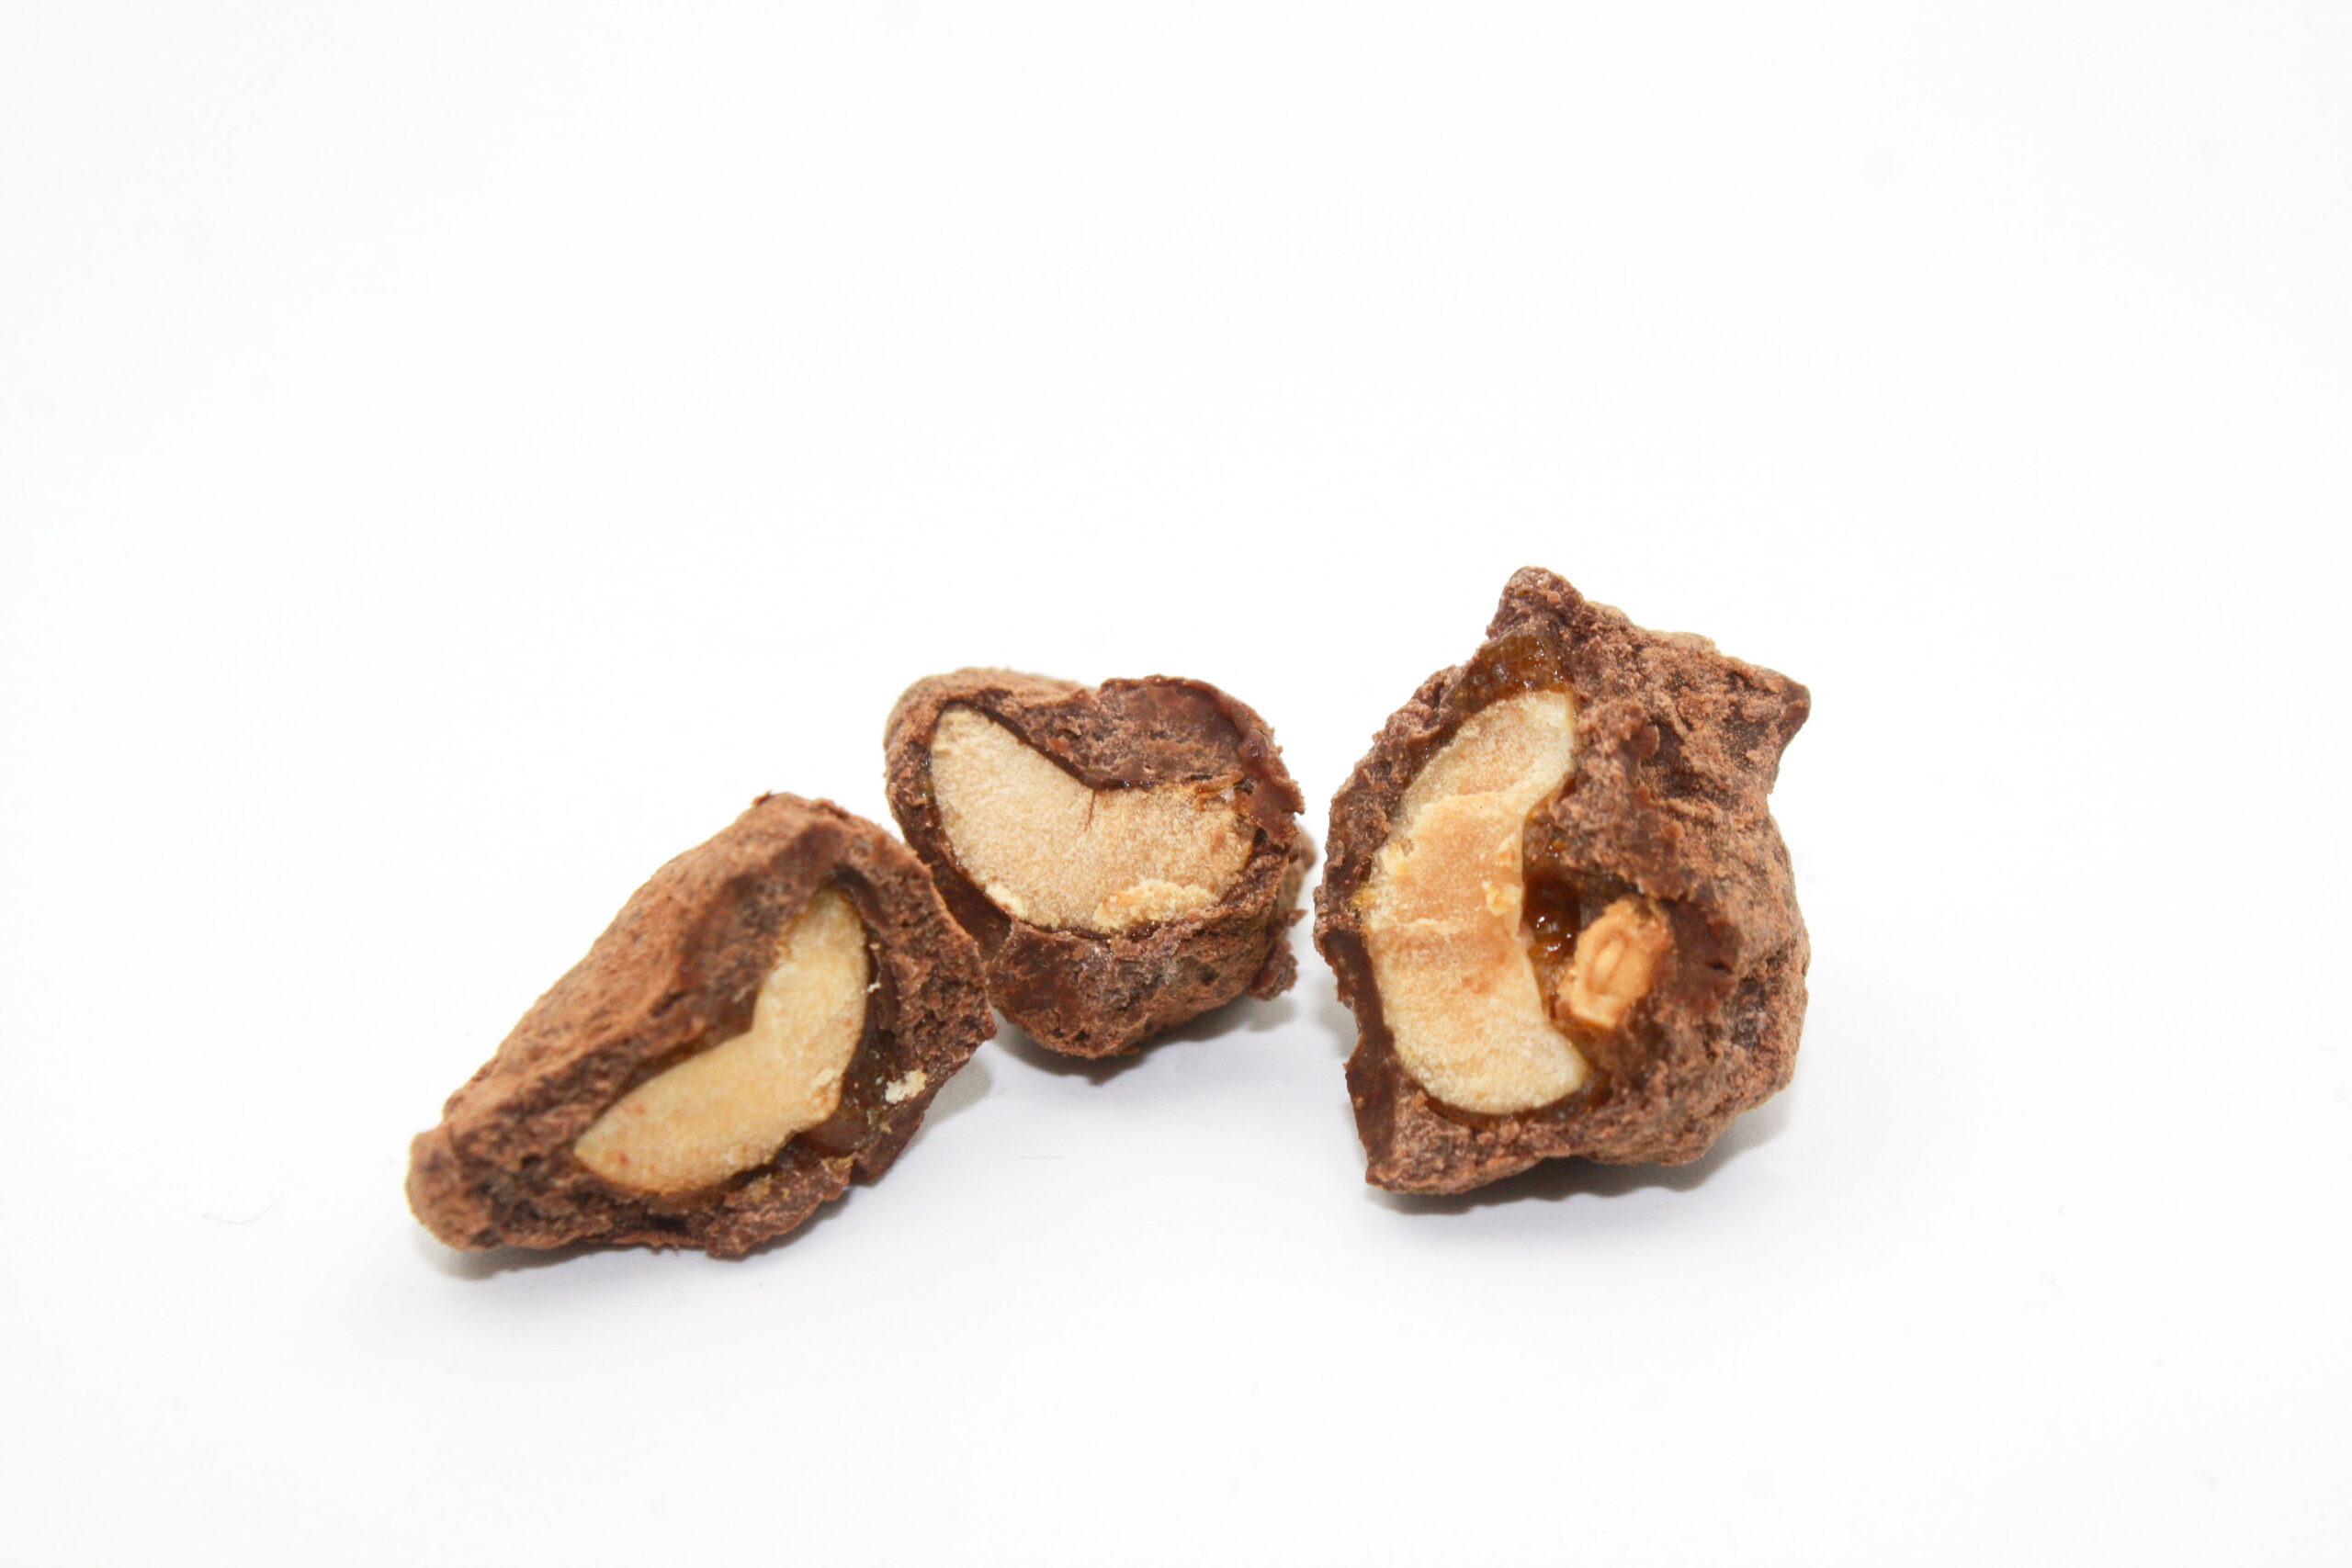 Dragée Peanuts (caramelized chocolate covered nuts)